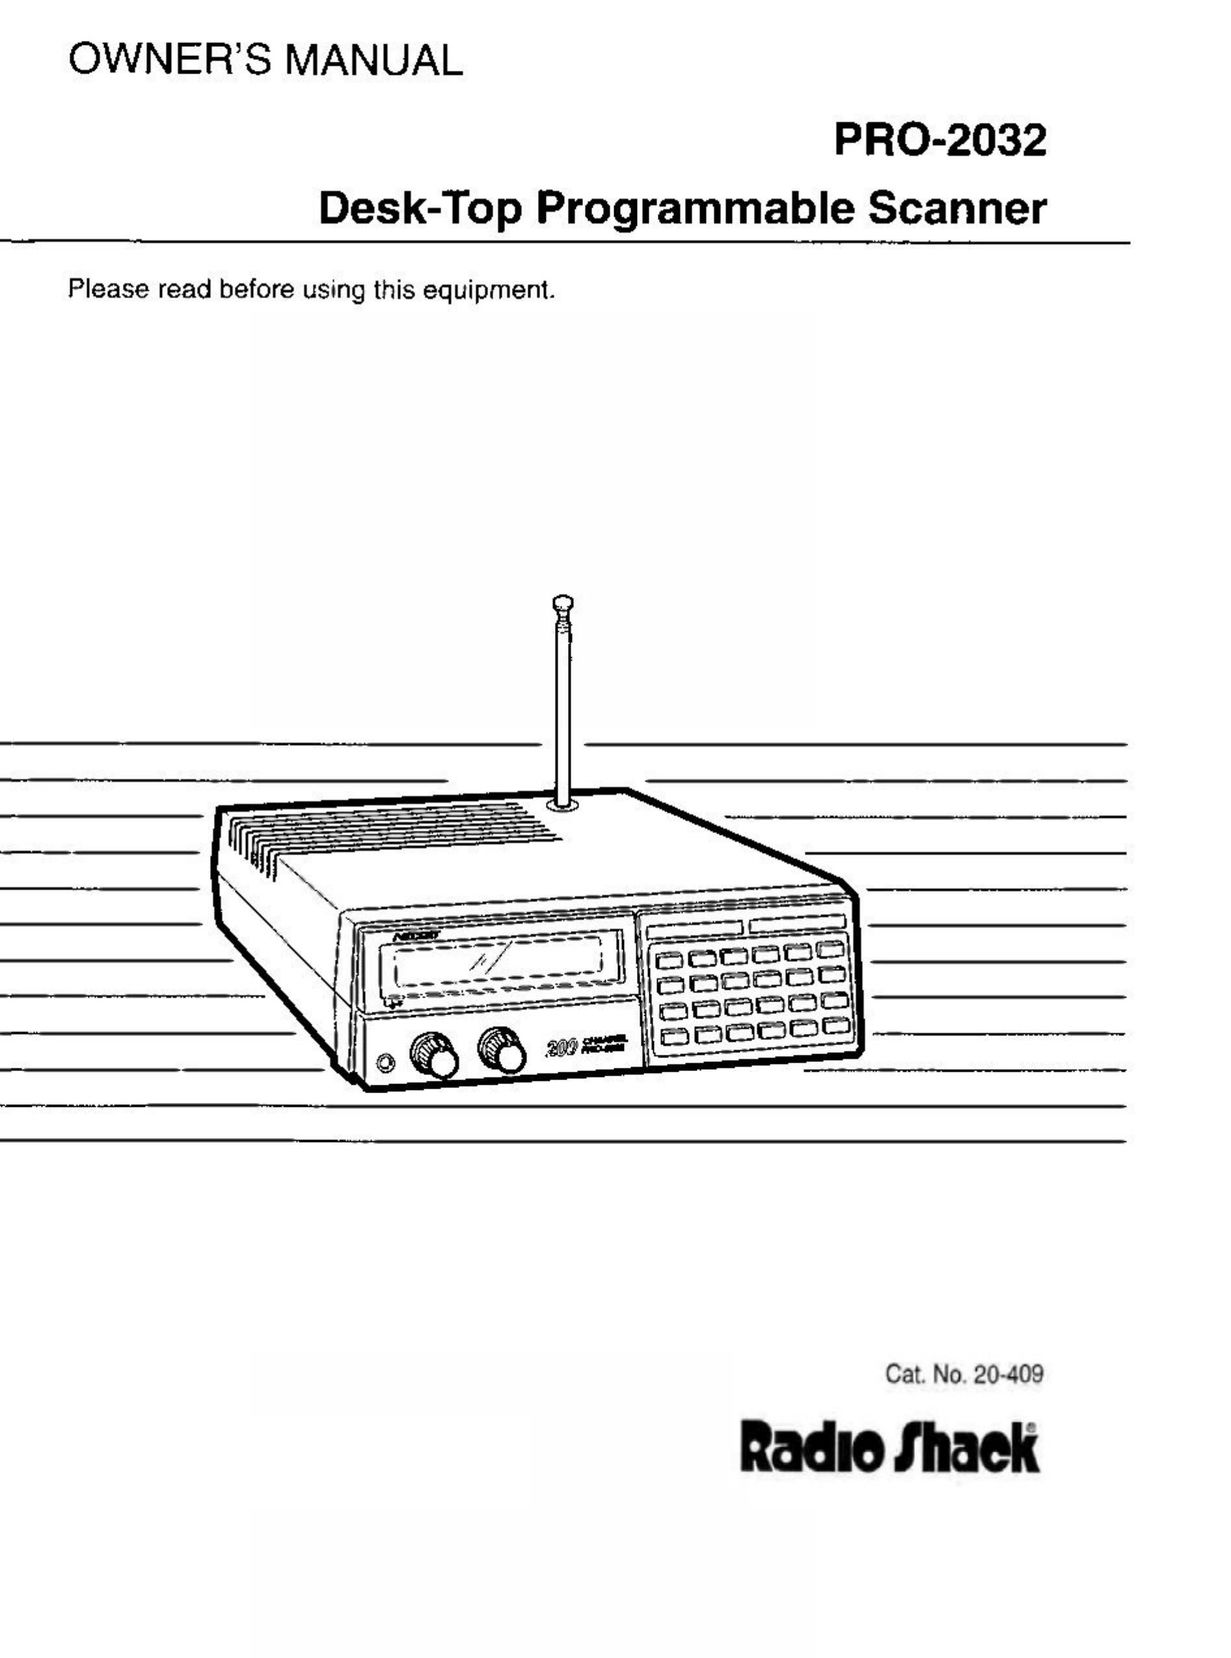 Radio Shack Pro-2032 Scanner User Manual